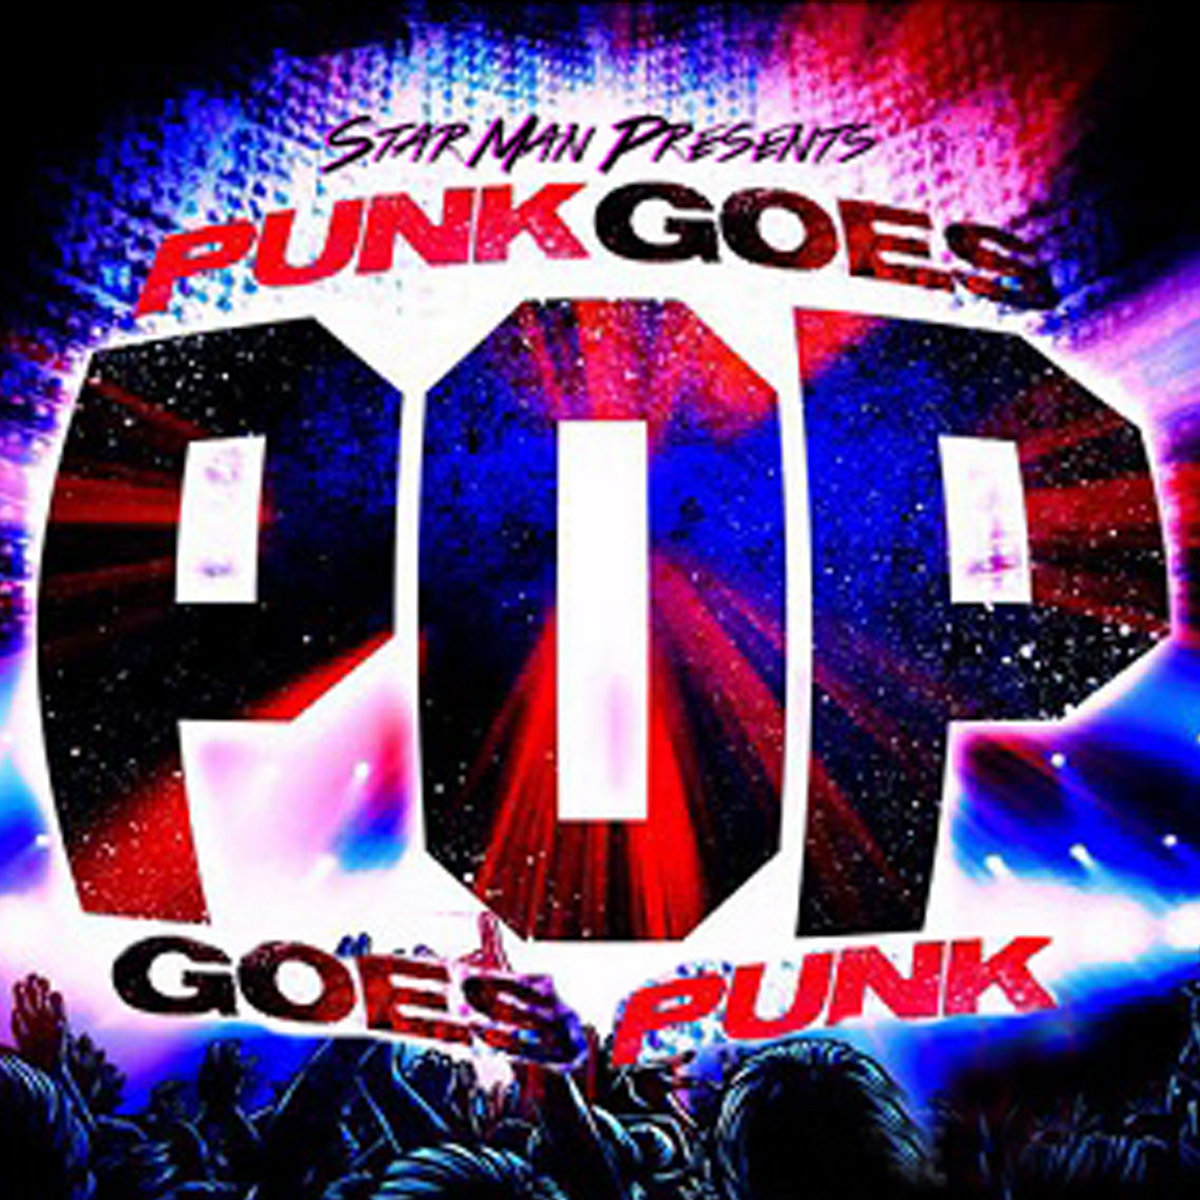 Punk goes pop 7 download rar